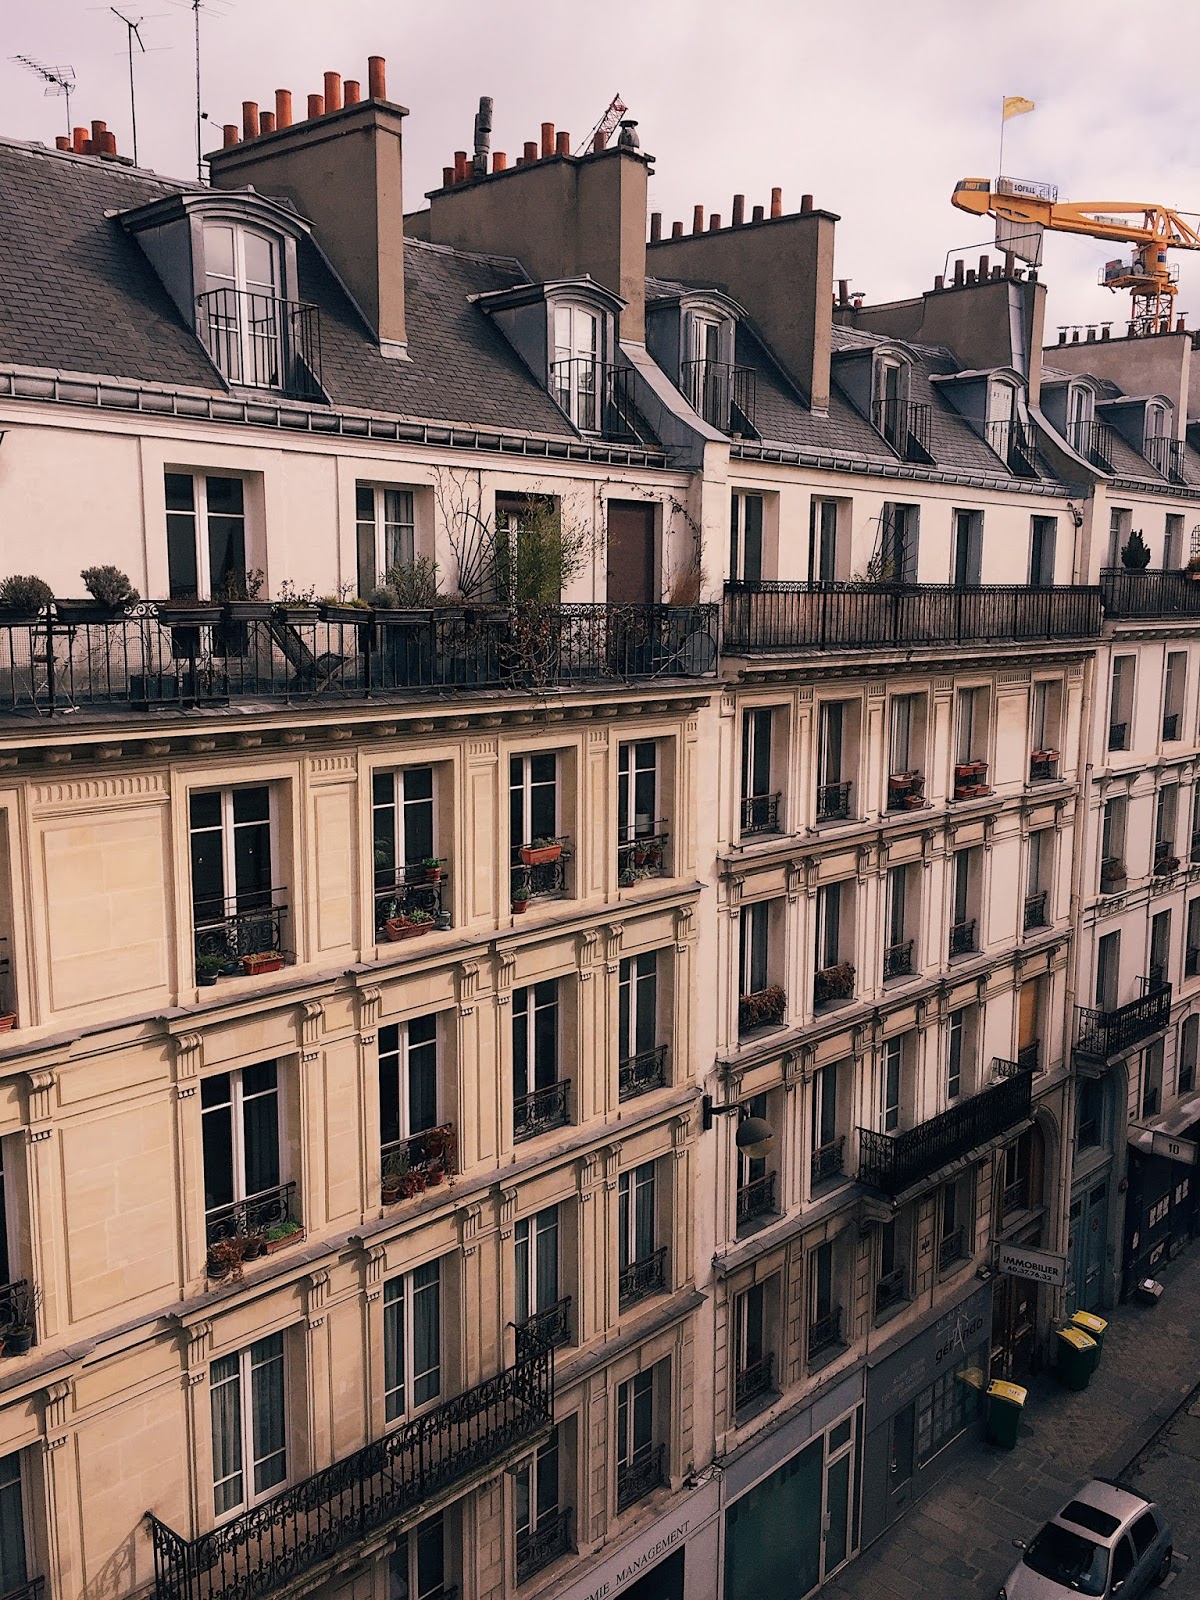 instagram guide to paris, must shot pics paris, where to take pictures in paris, what to capture in paris, paris, paris travel guide, paris balcony, paris architecture, paris pic, paris building